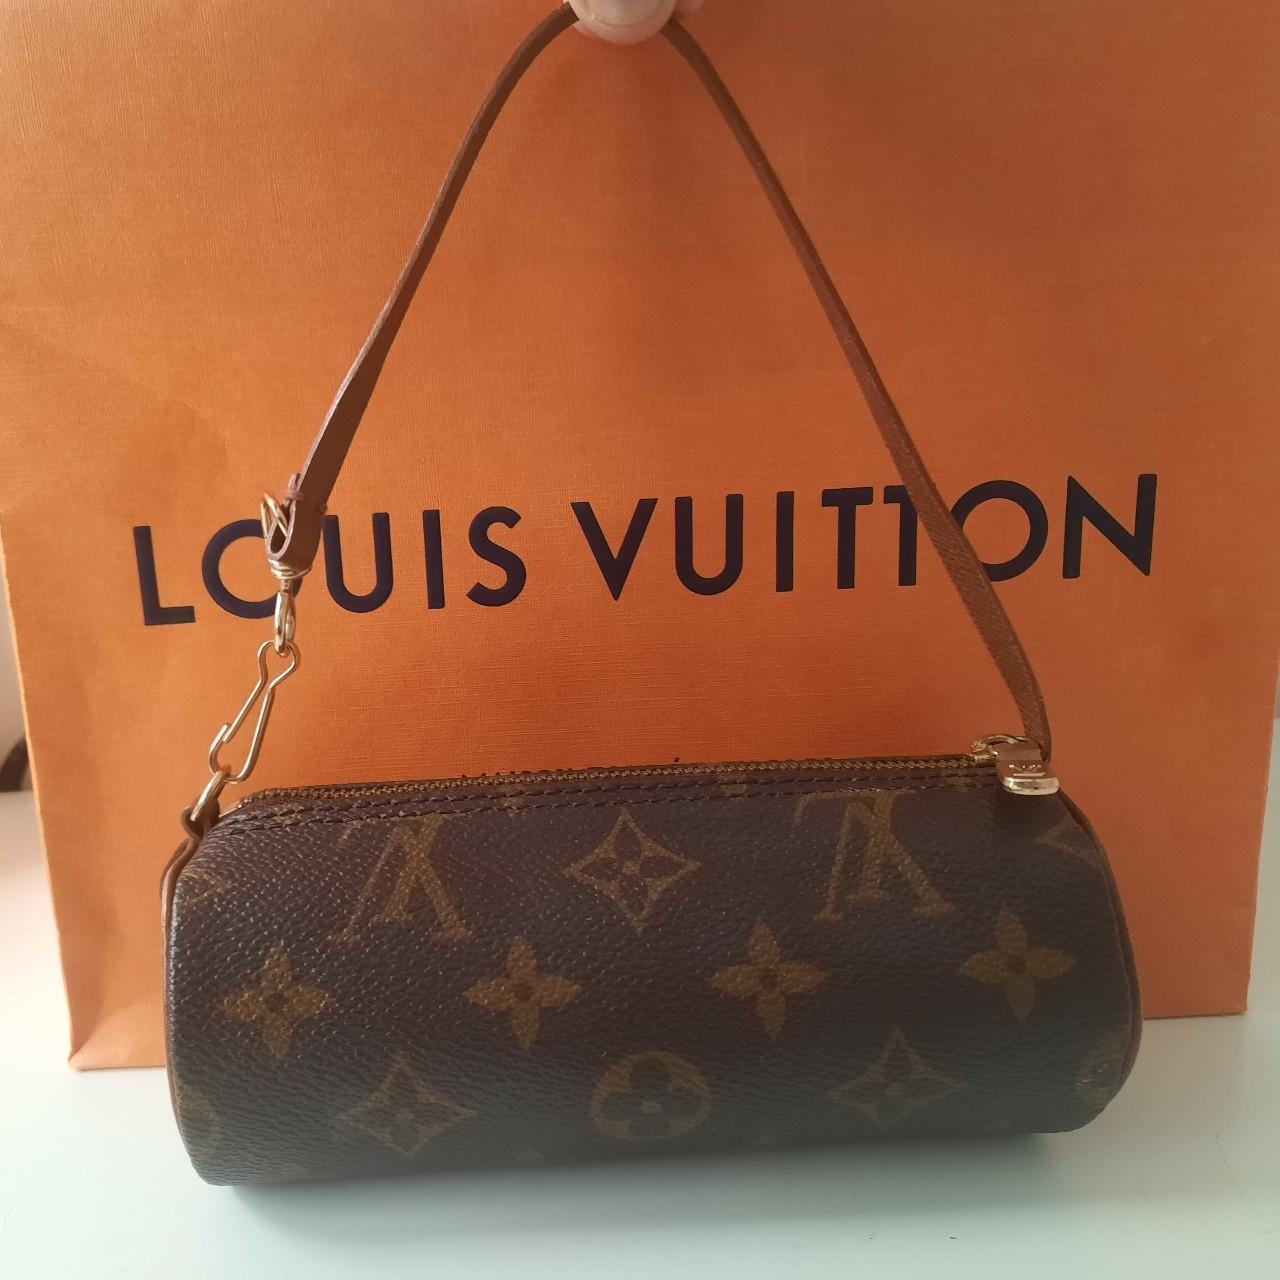 Vintage Louis Vuitton cross body bag In great - Depop